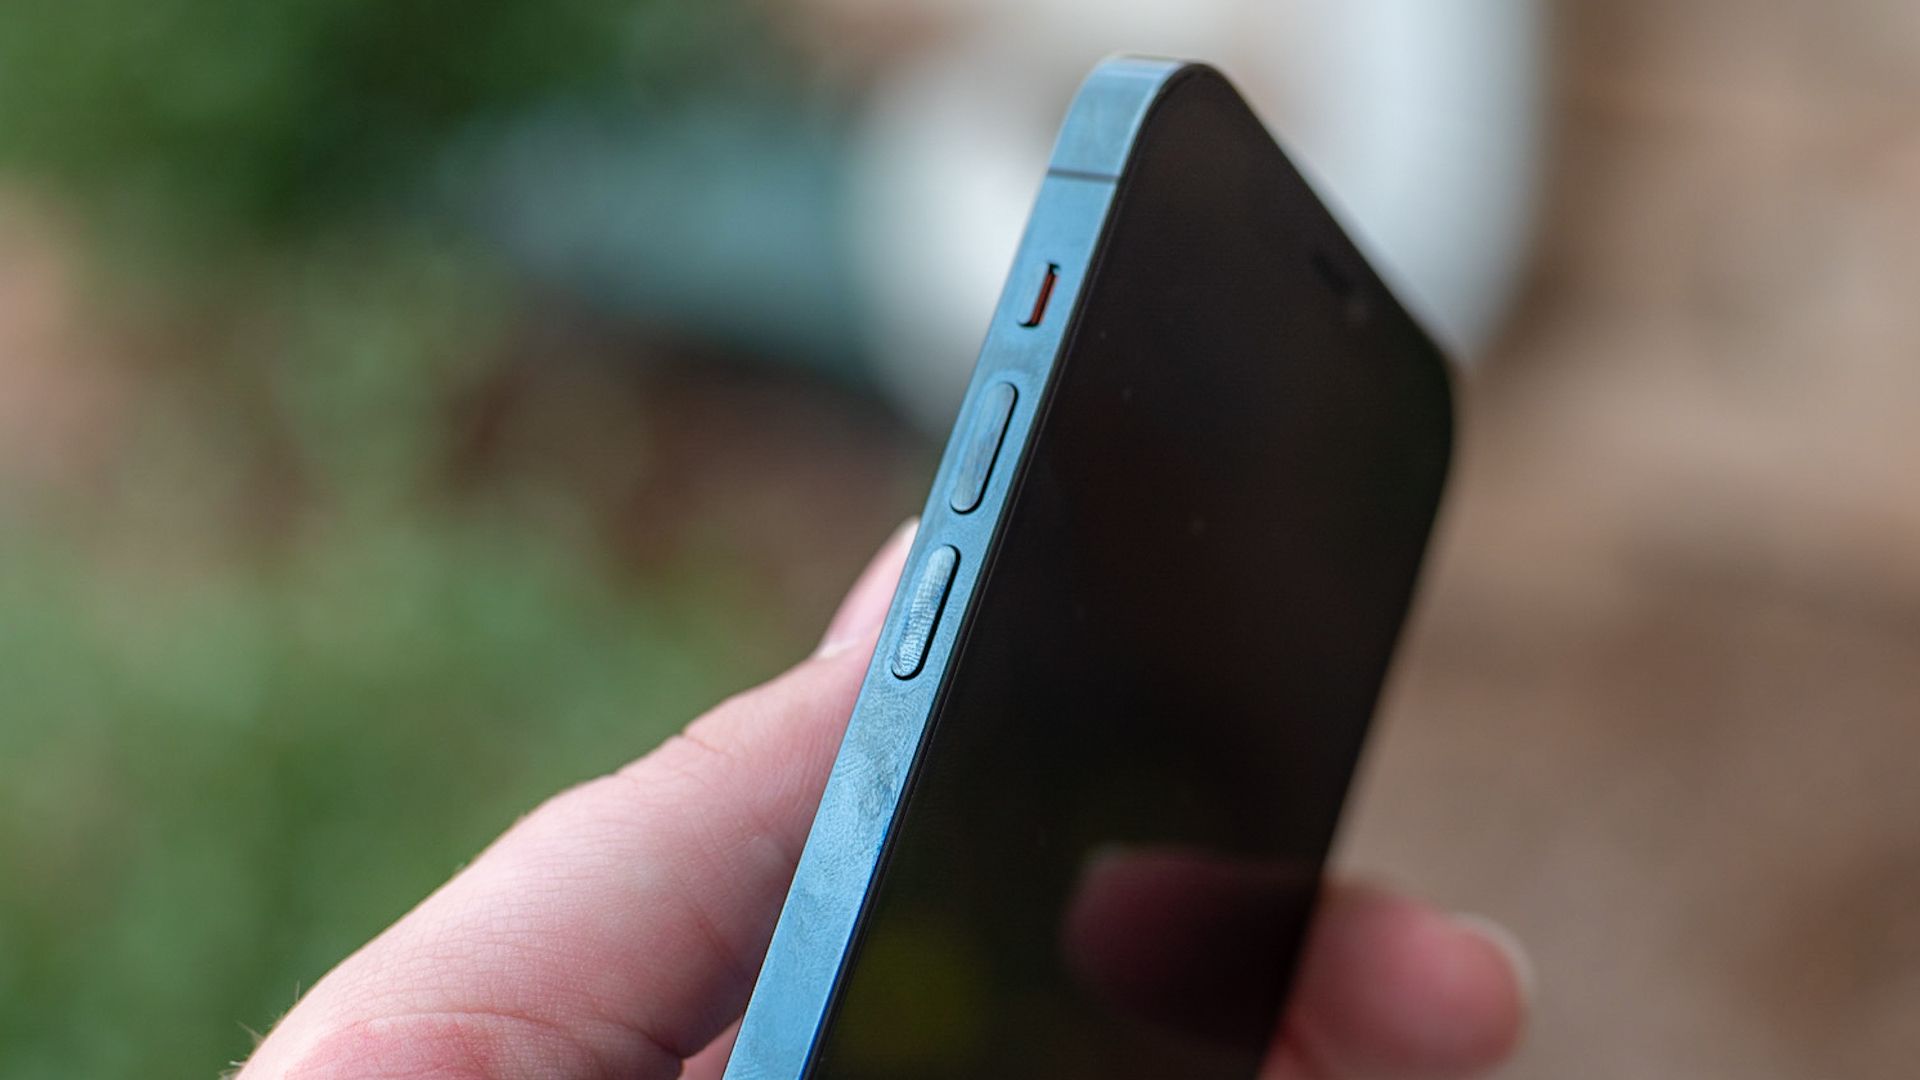 The iPhone 12 Pro's fingerprint magnet stainless steel side